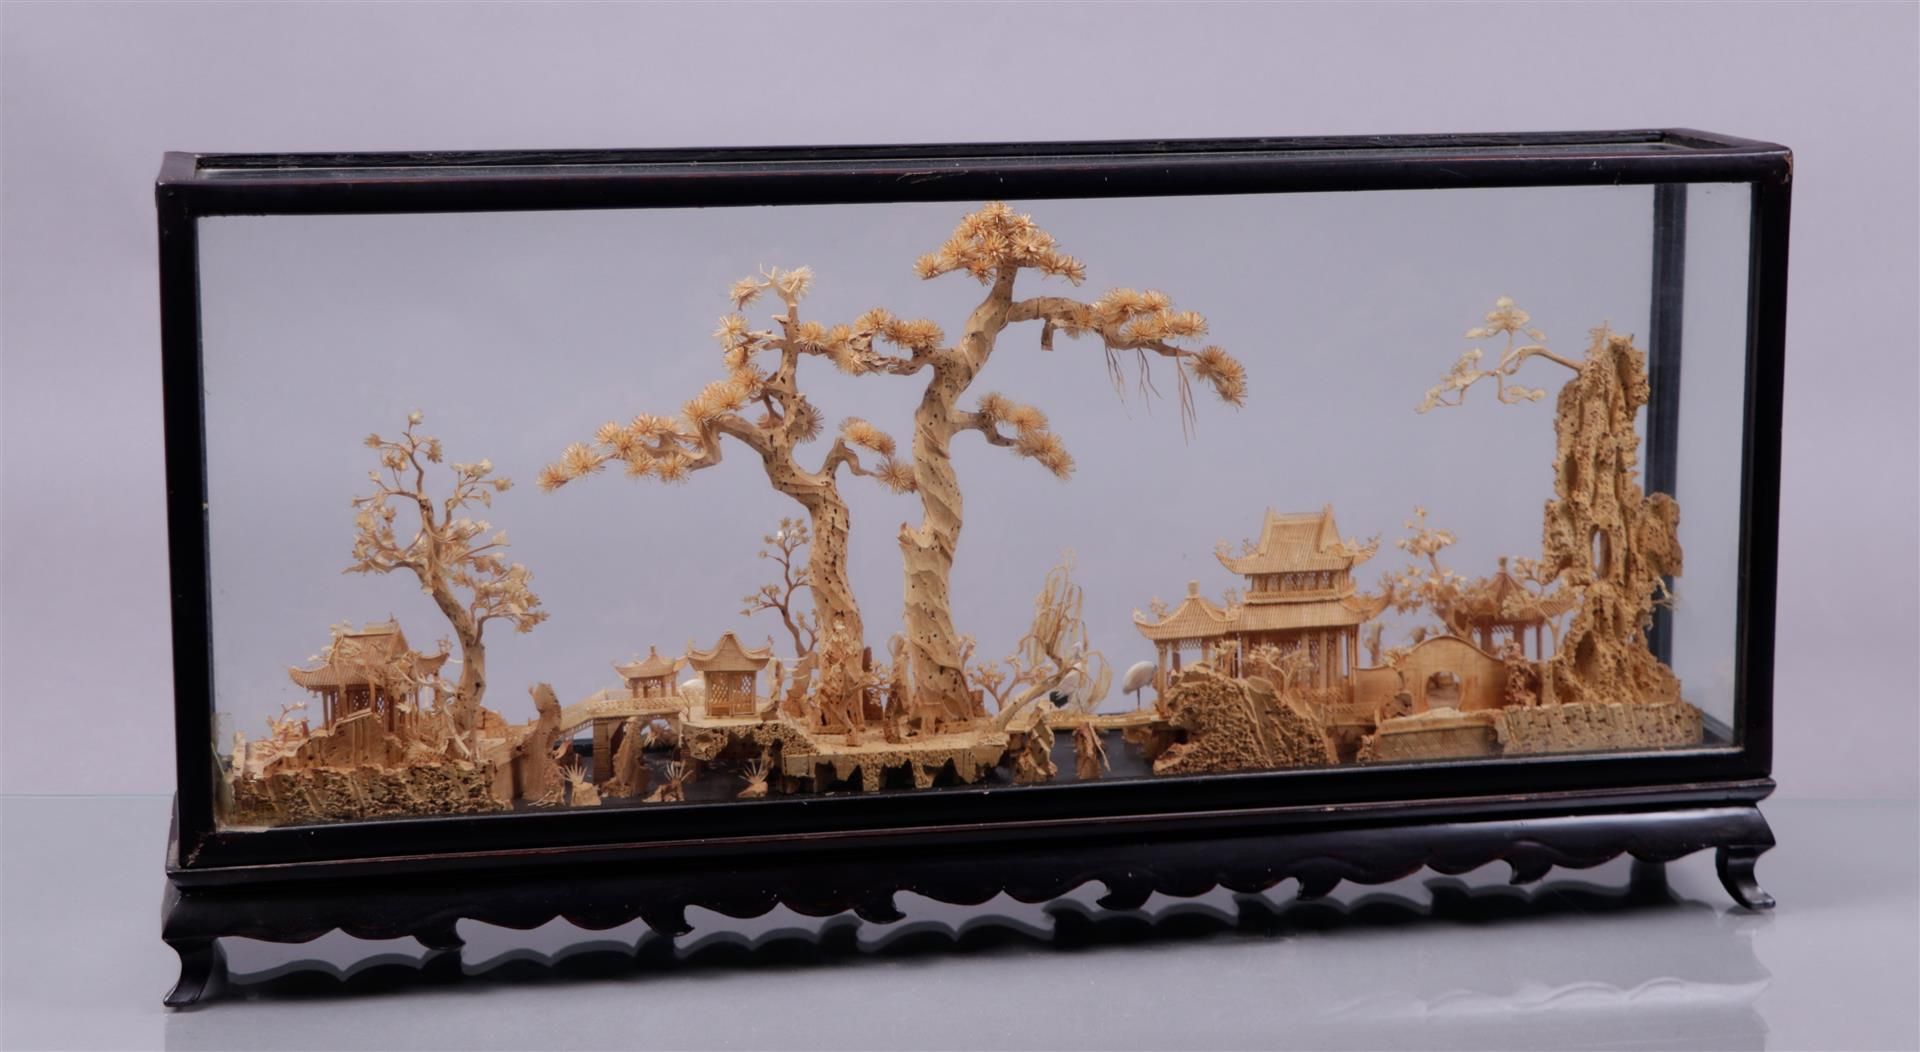 A Japanese diorama made of cork depicting court gardens.
29 x 11 x 59 cm.